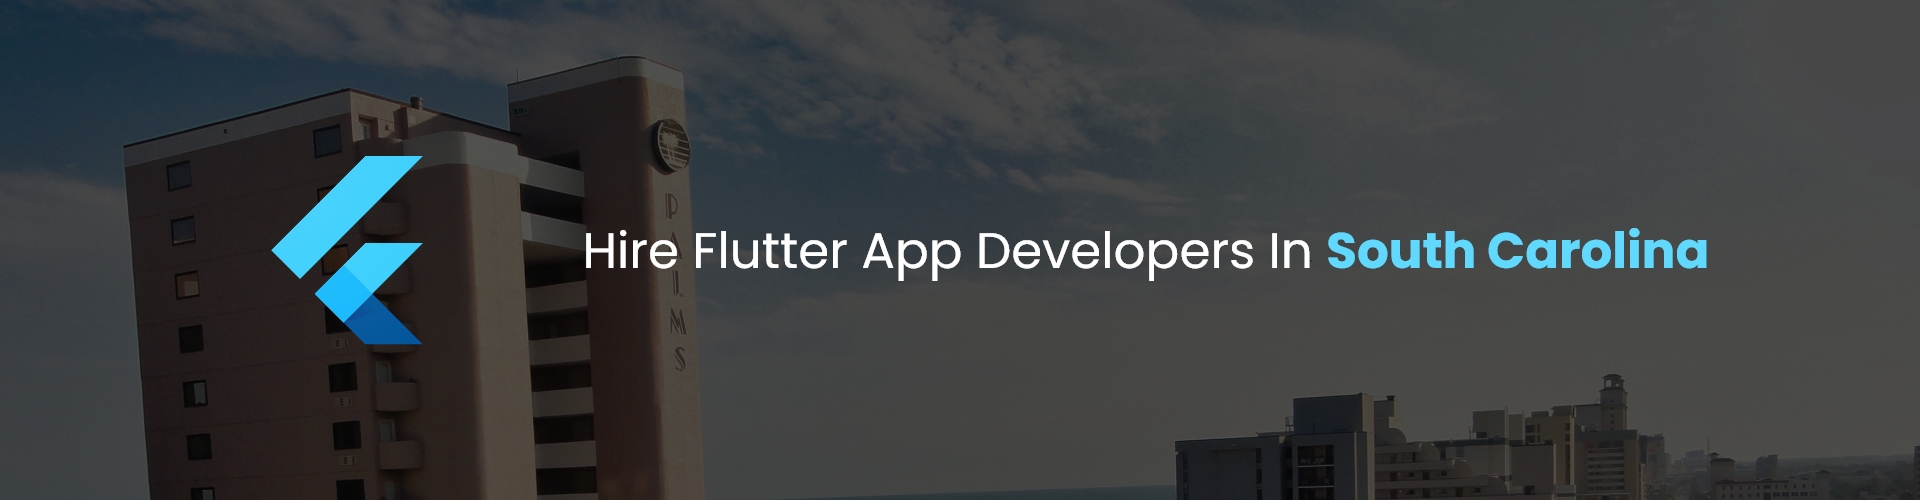 flutter app developers in sa 1